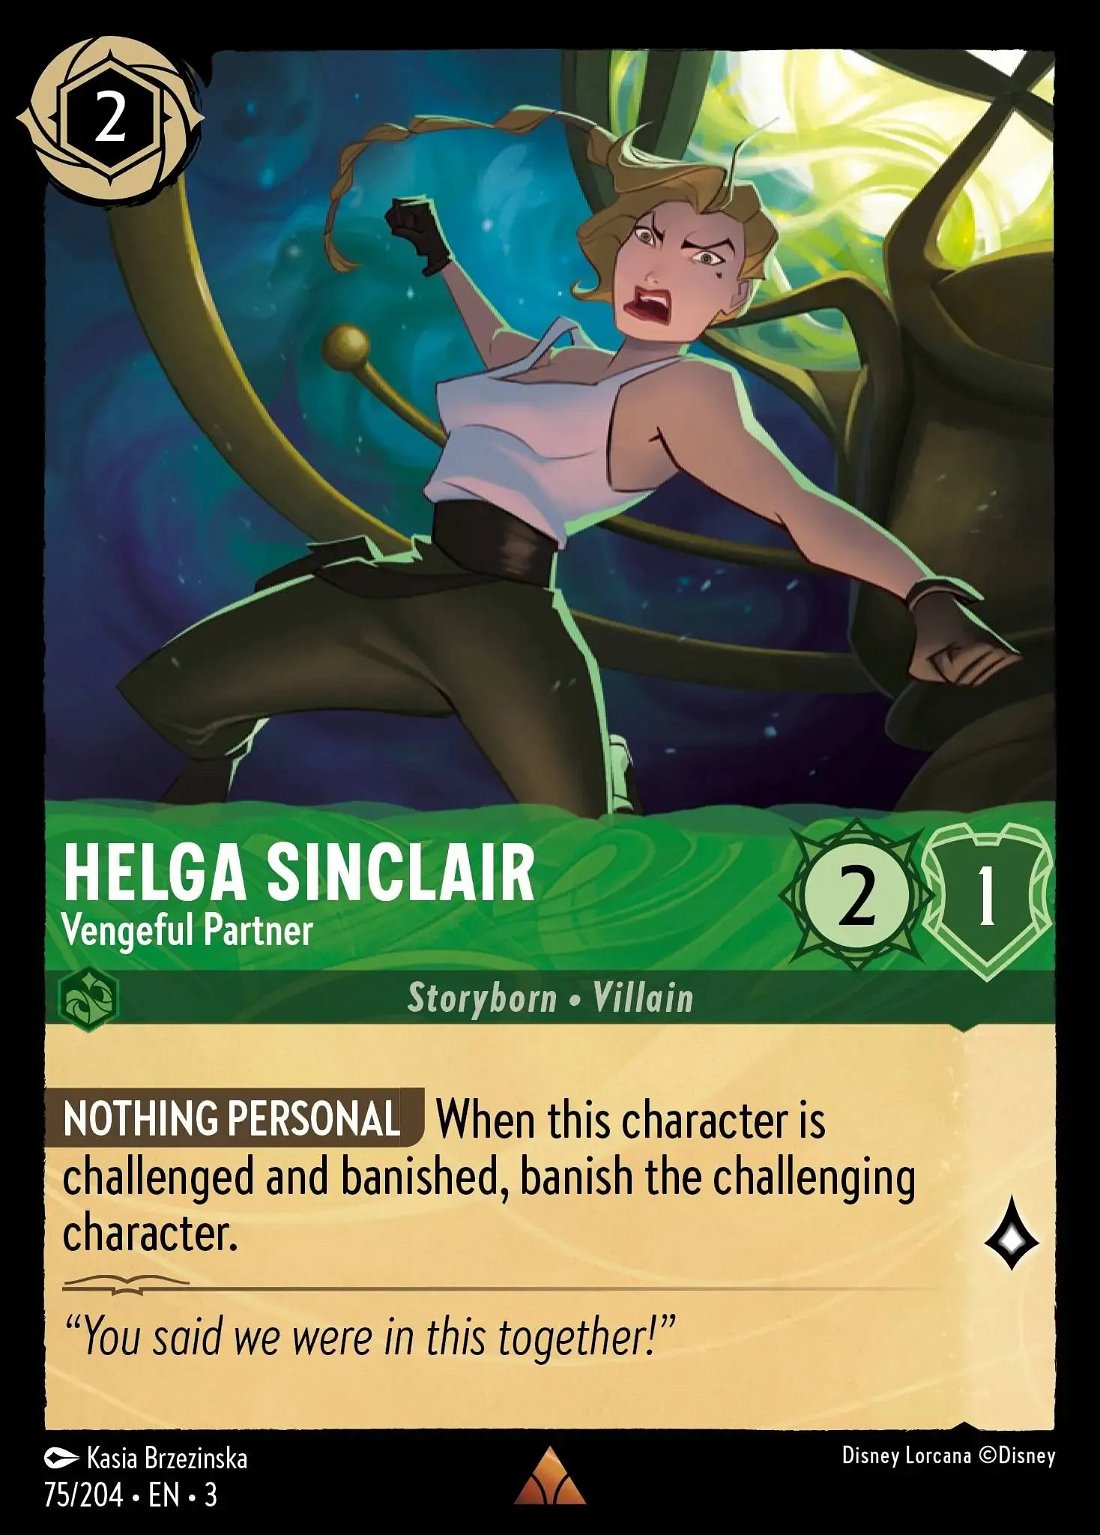 Helga Sinclair - Vengeful Partner Crop image Wallpaper